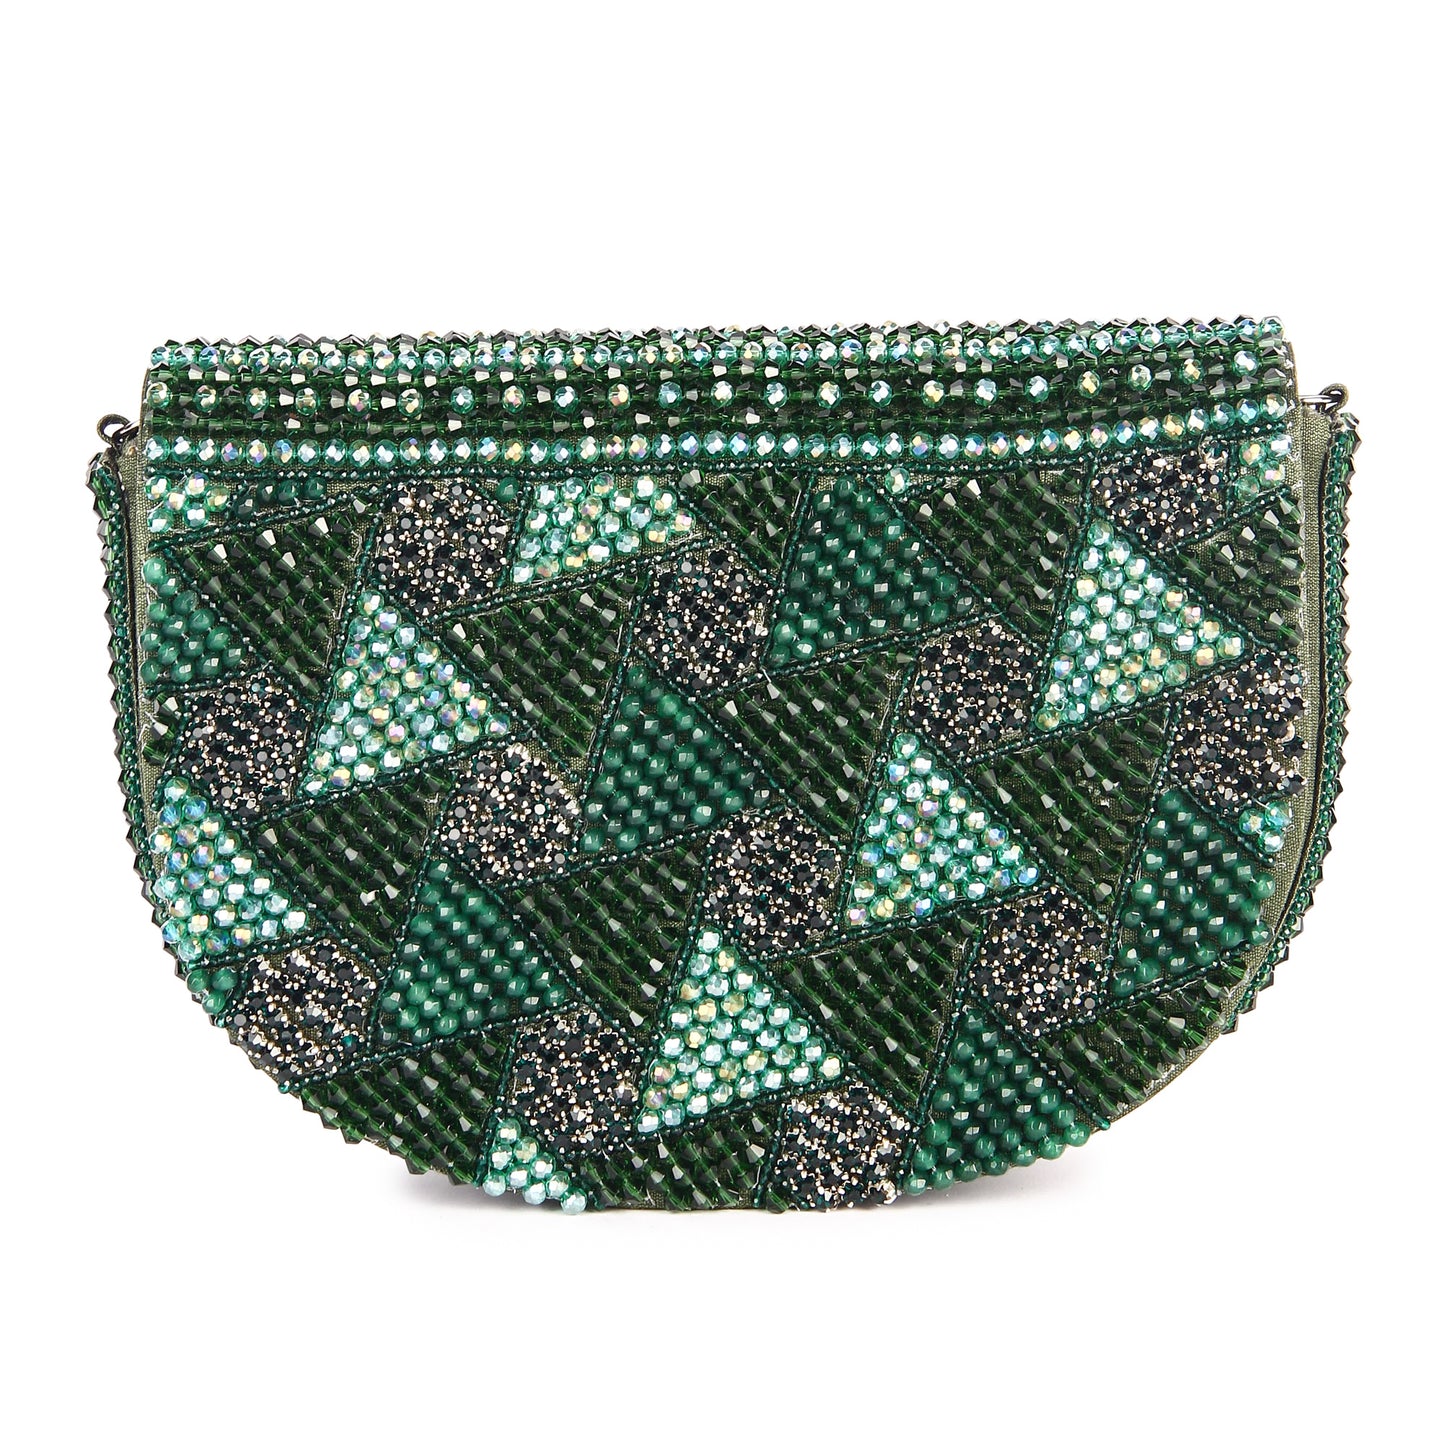 Green crystal beauty clutch